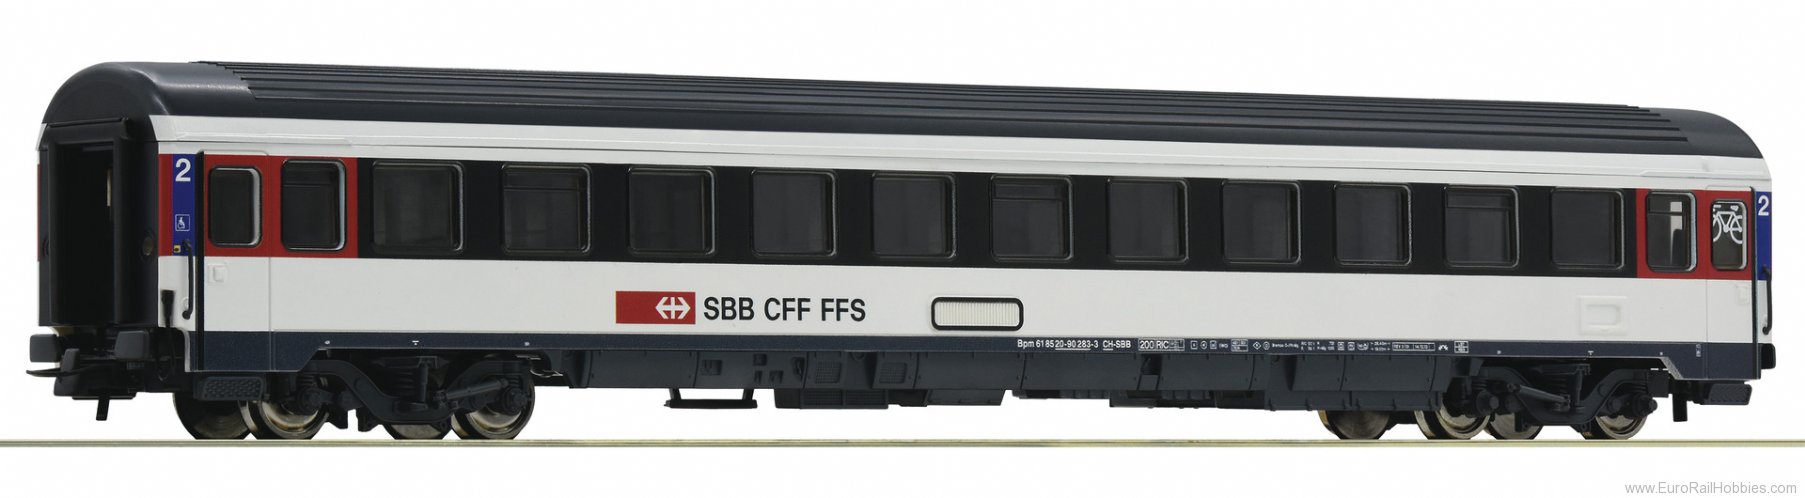 Roco 54167 SBB 2nd class Eurocity Compartment Coach